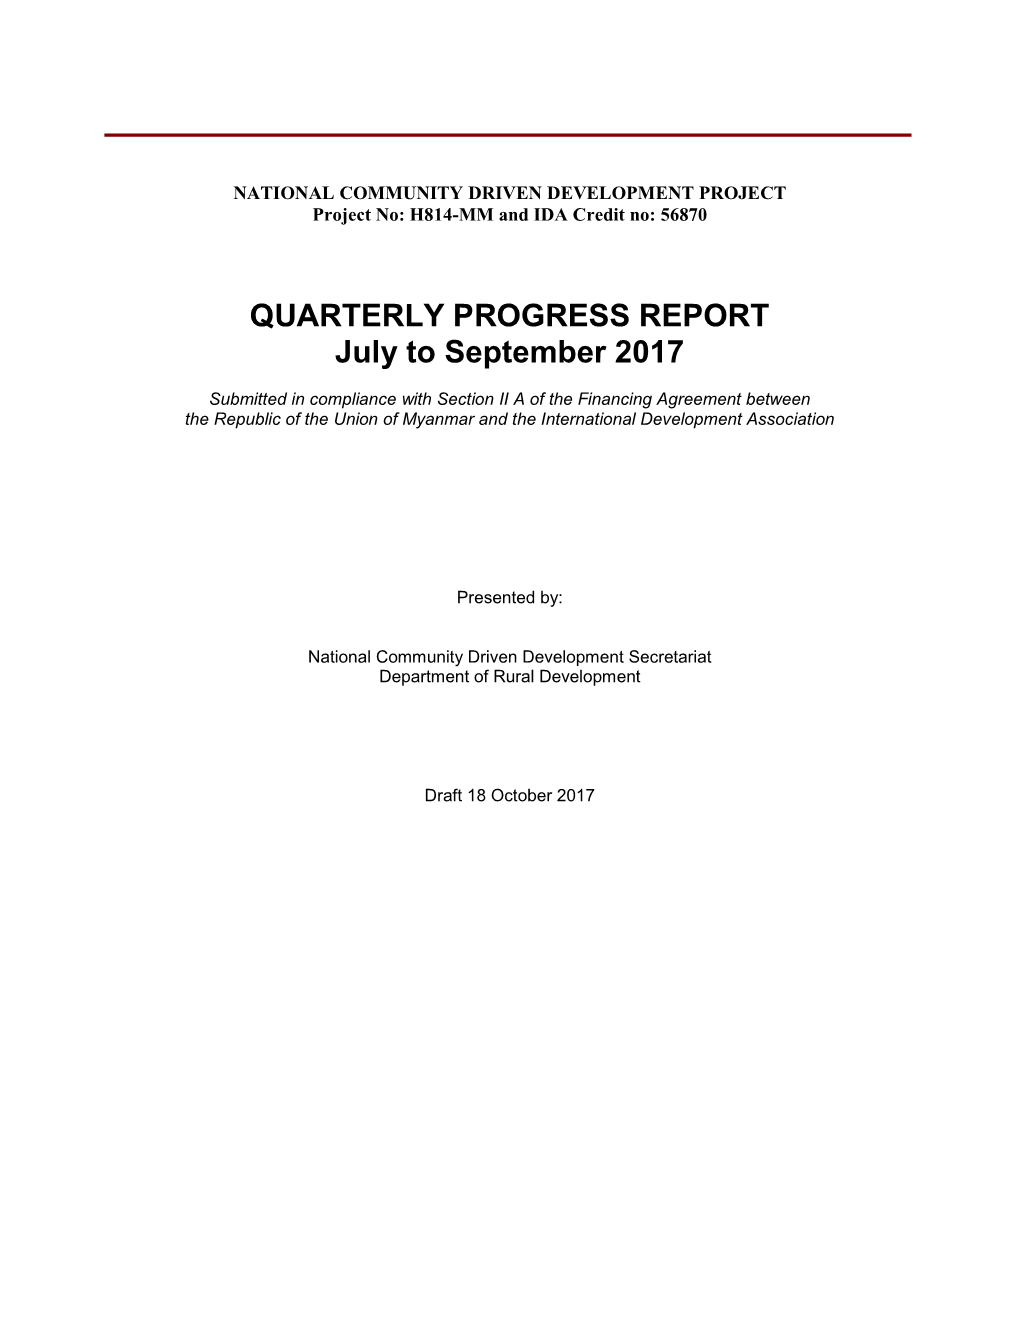 QUARTERLY PROGRESS REPORT July to September 2017